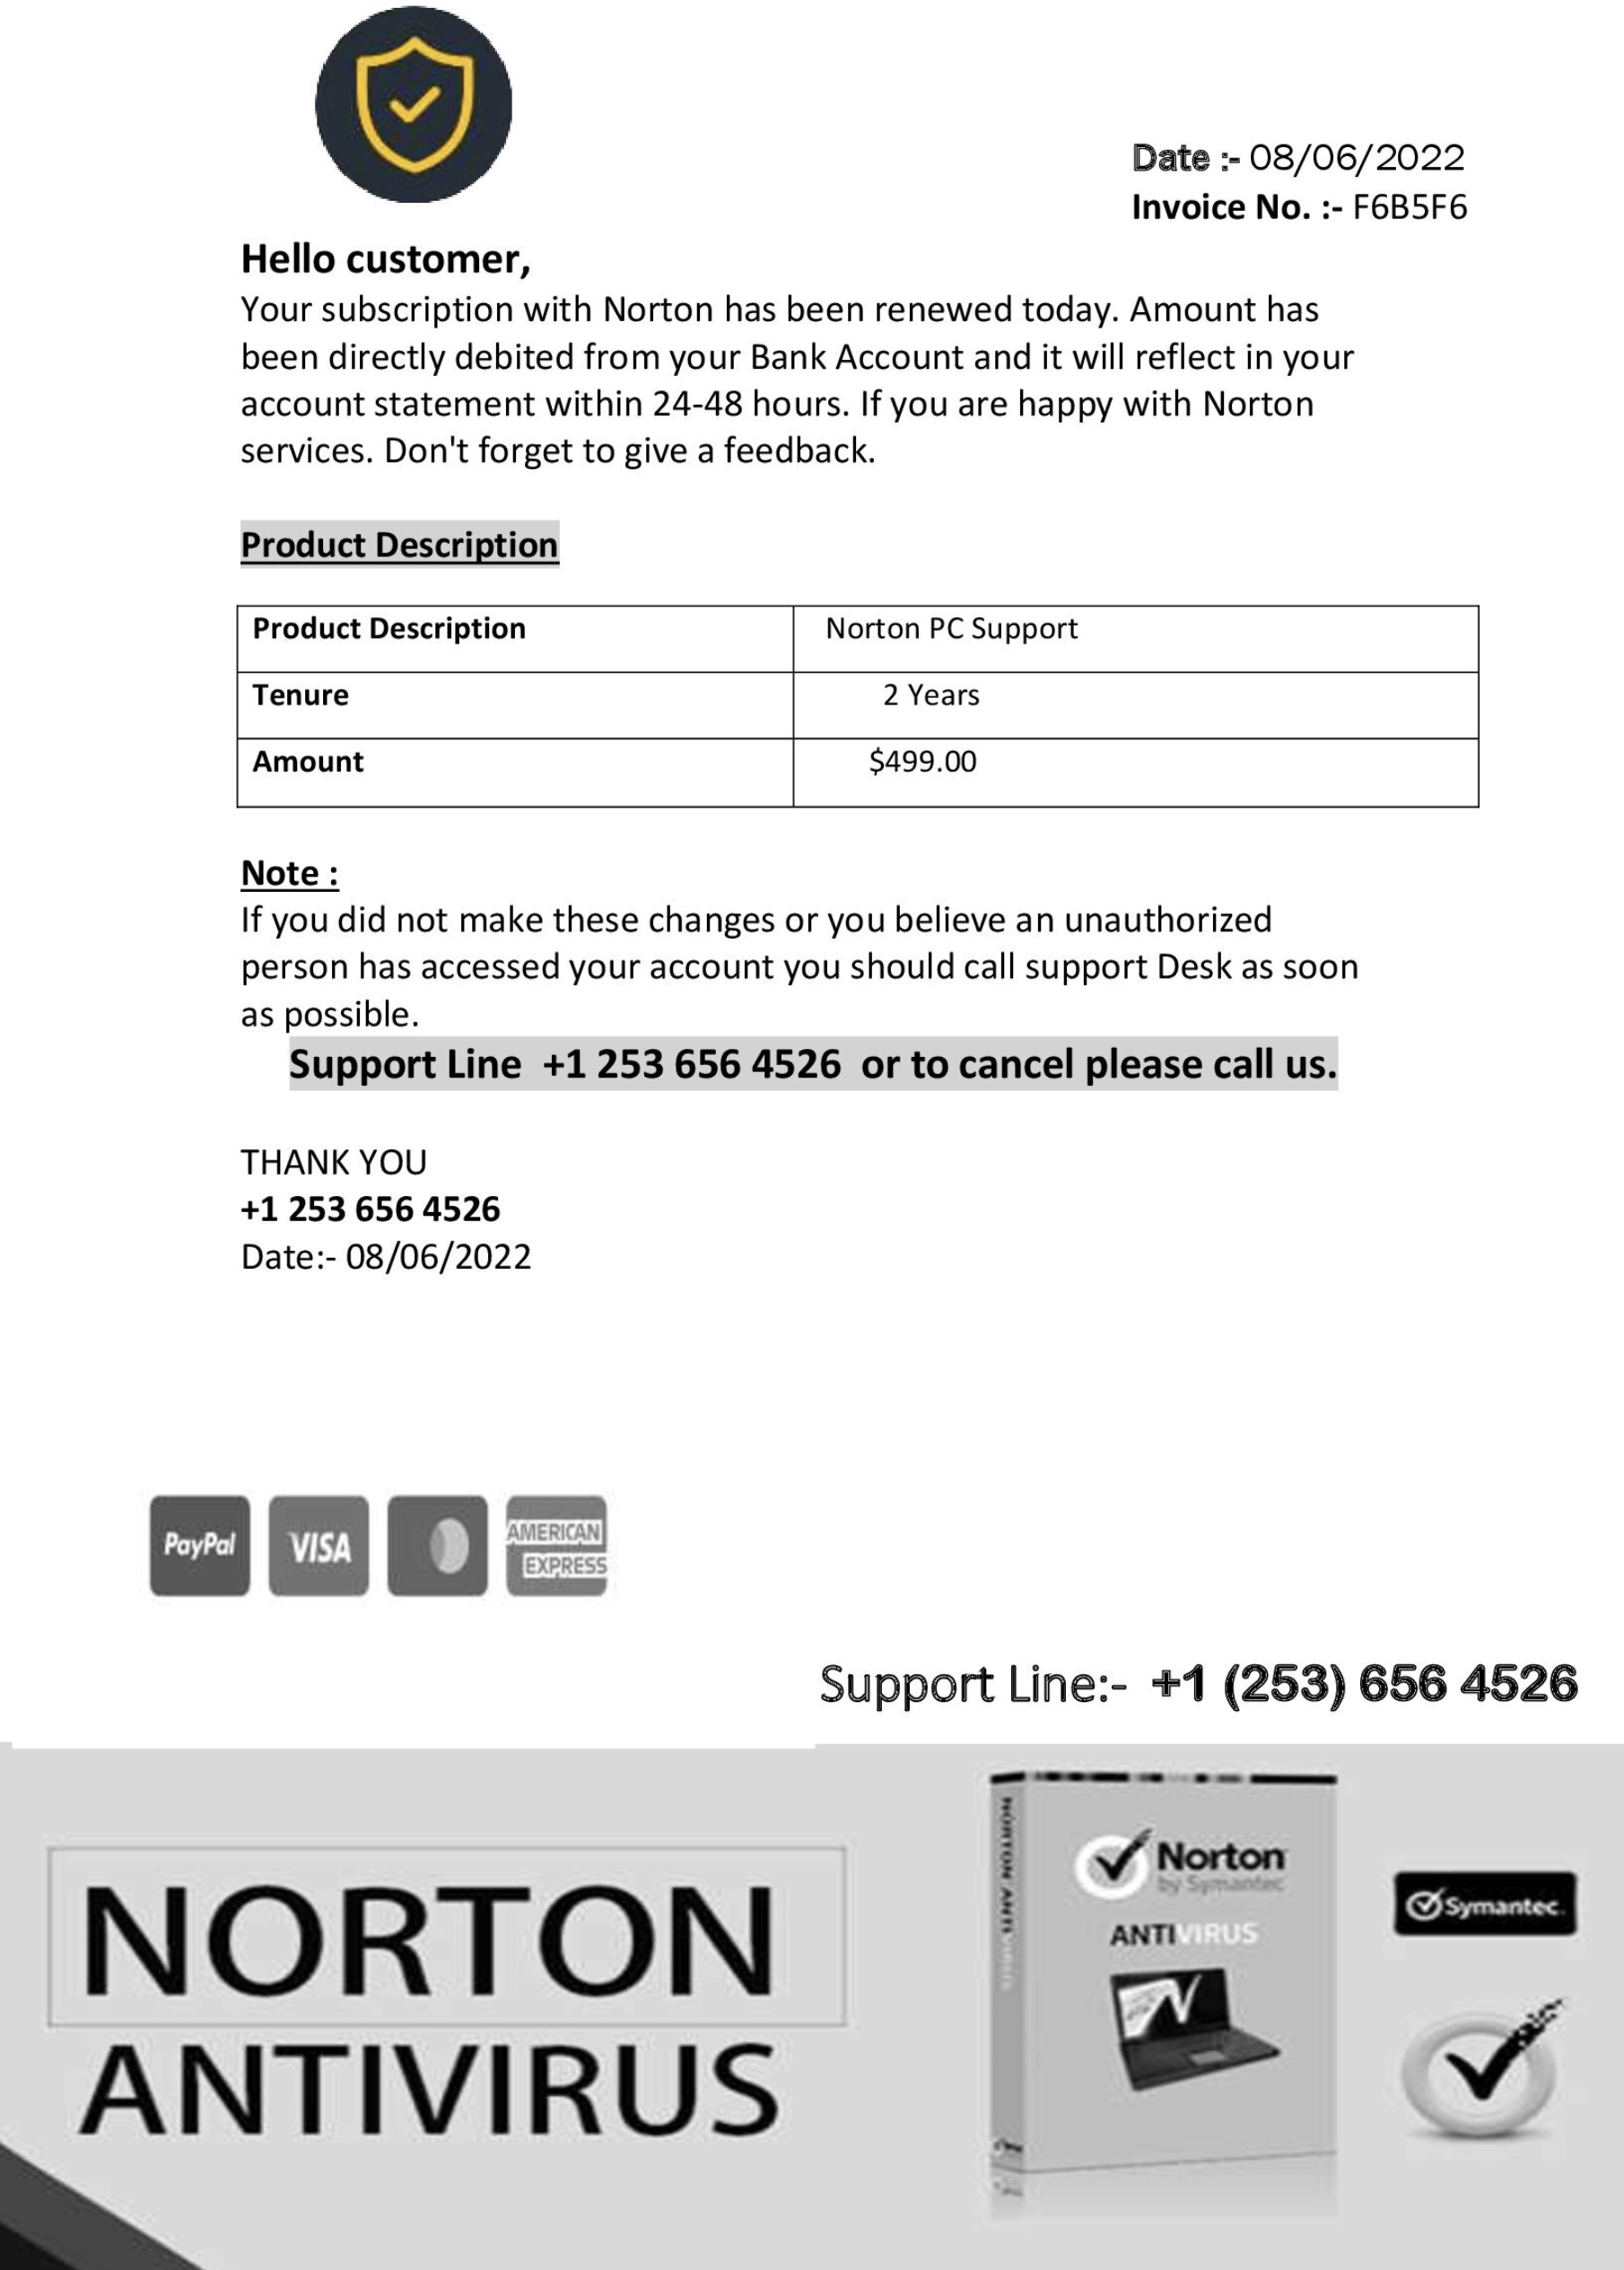 Norton Antivirus Scam Renewal Email